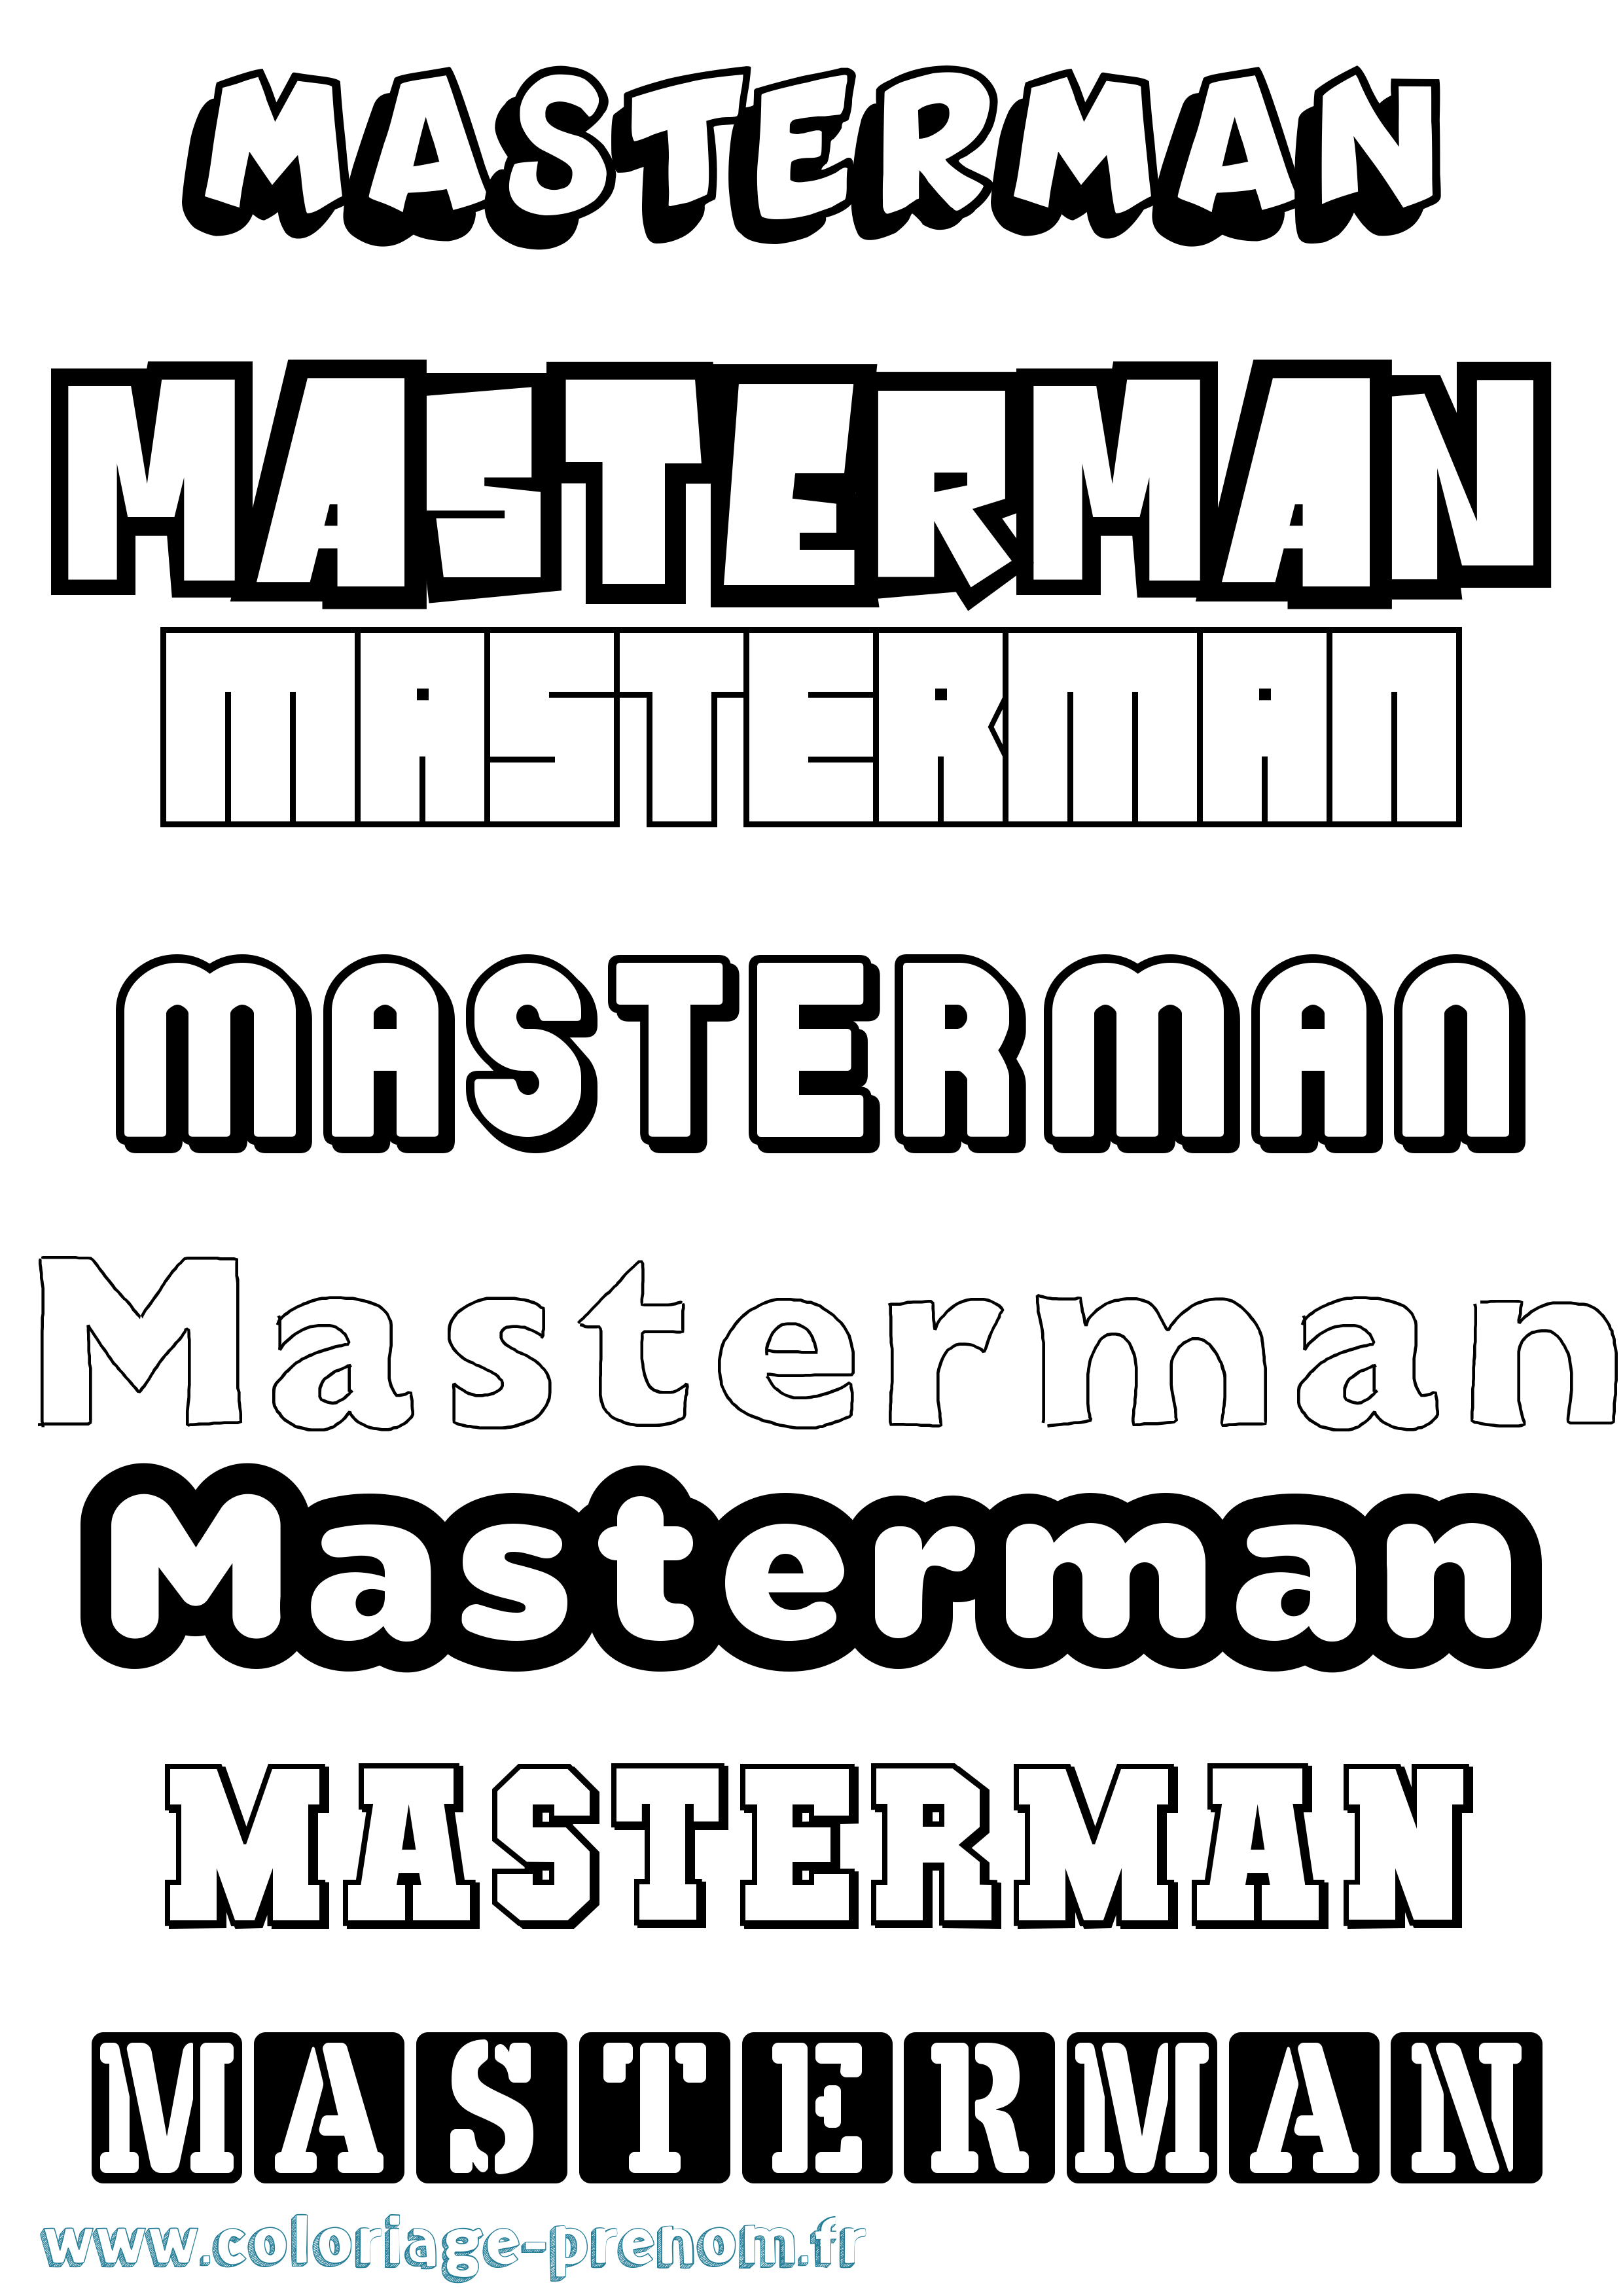 Coloriage prénom Masterman Simple